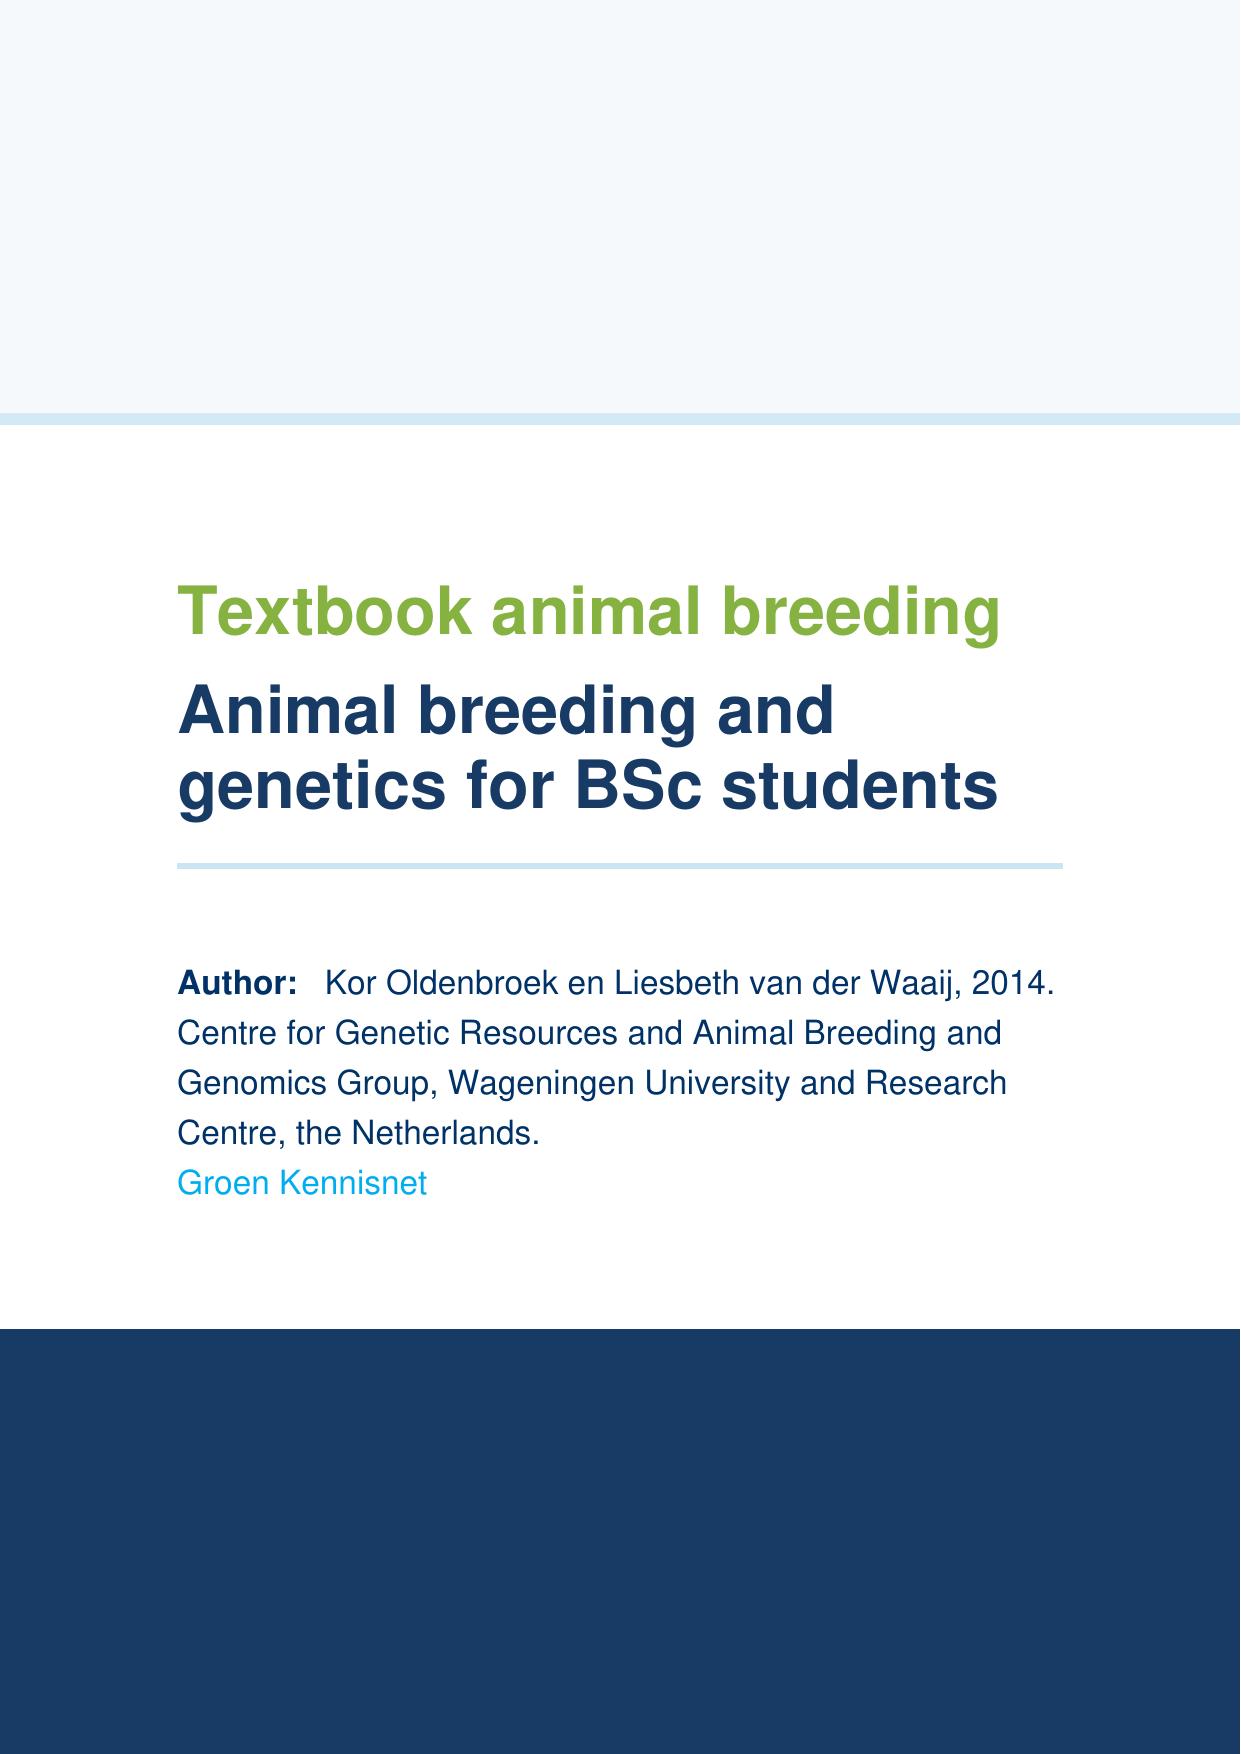 Textbook Animal Breeding and Genetics 2014